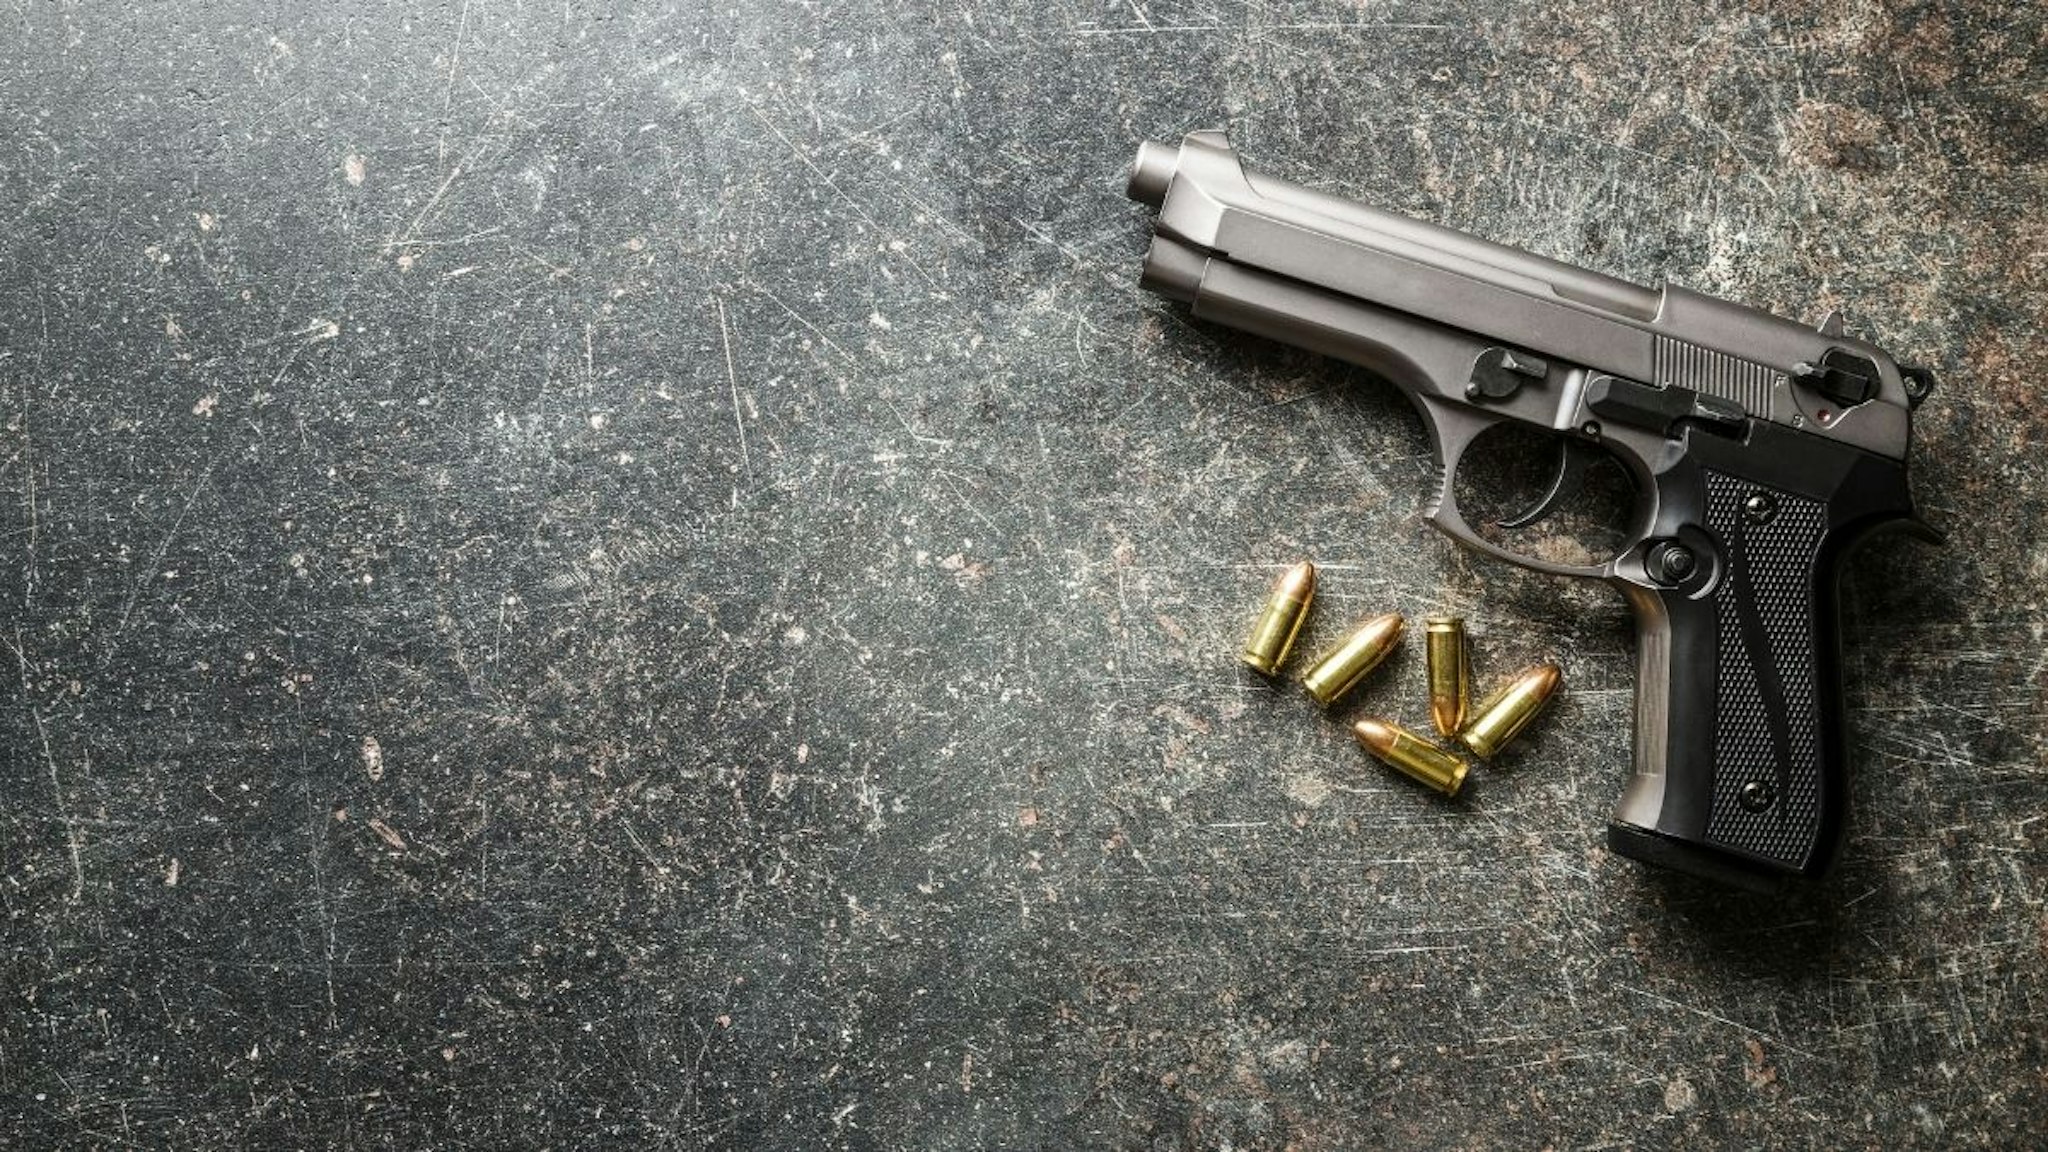 9mm pistol bullets and handgun on black table.